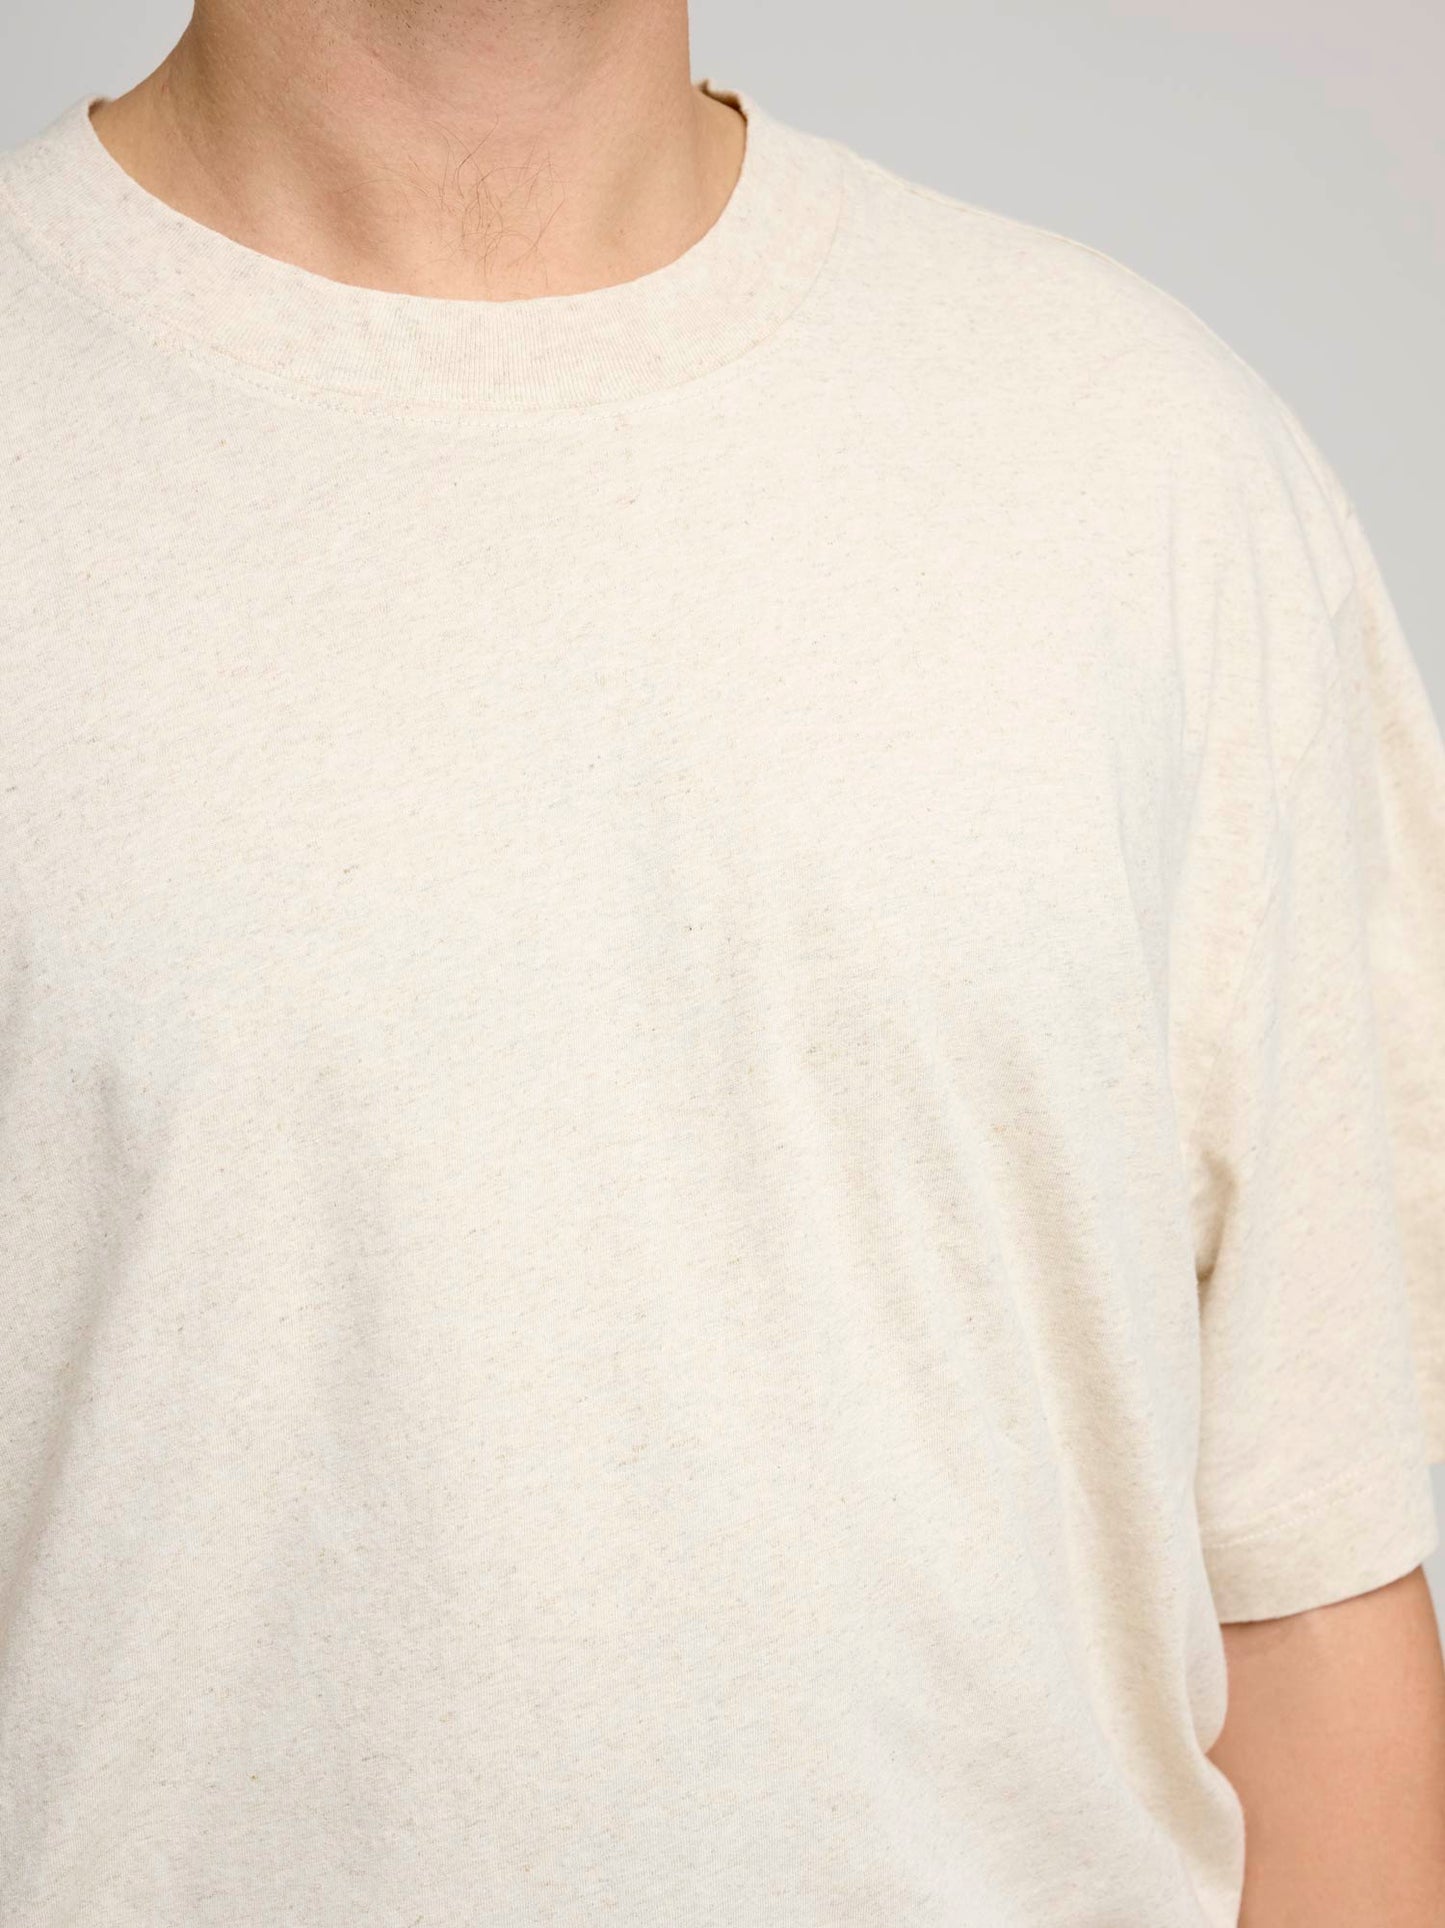 Simple T-Shirt Cotton Linen Jersey, Natural